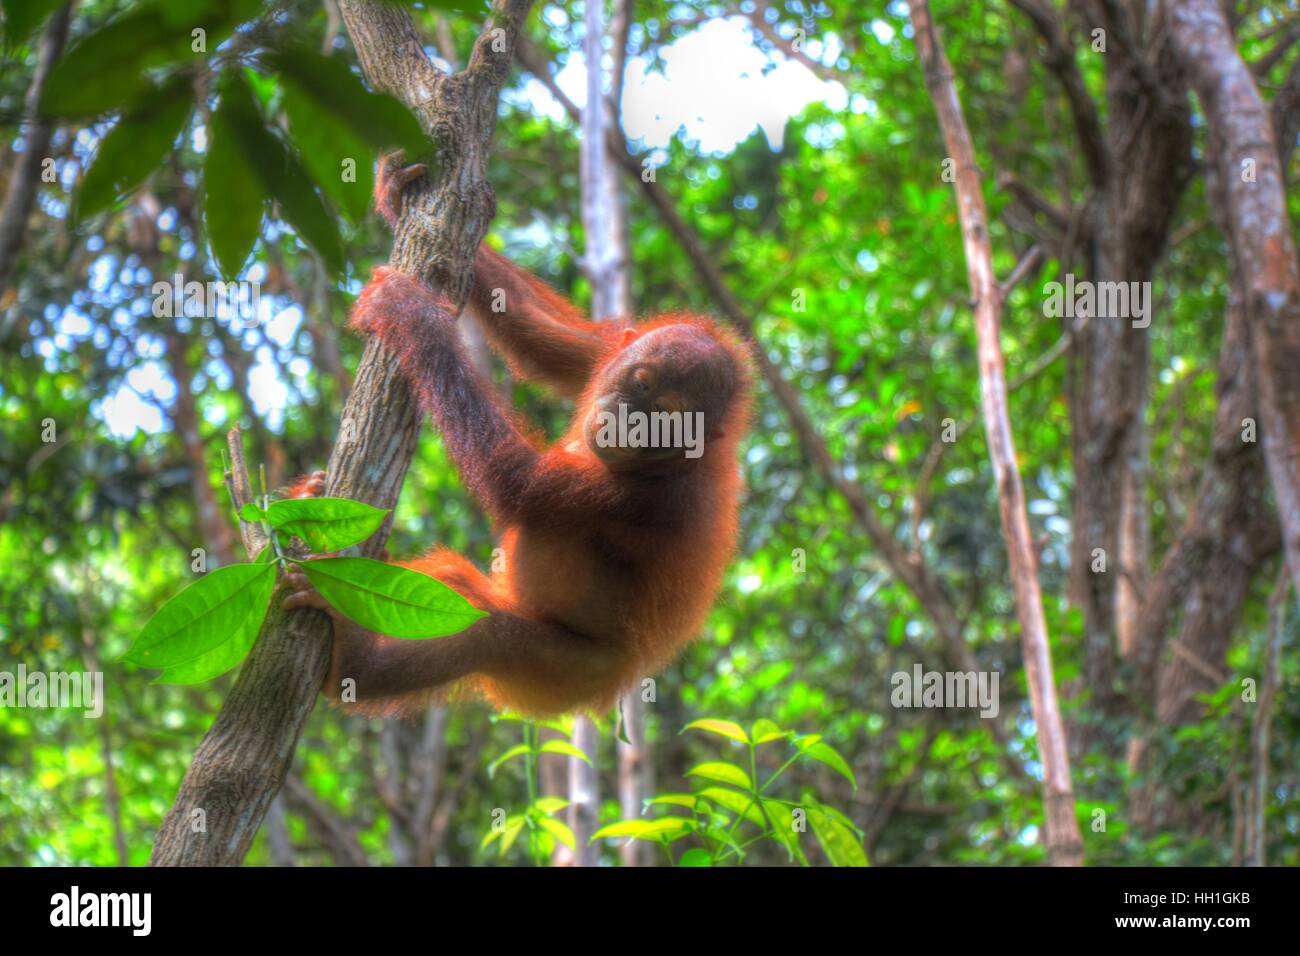 A beautiful sunlit orangutang swinging from a tree at the Sepilok Rehabilitation Centre in Sabah, Malaysia. Stock Photo